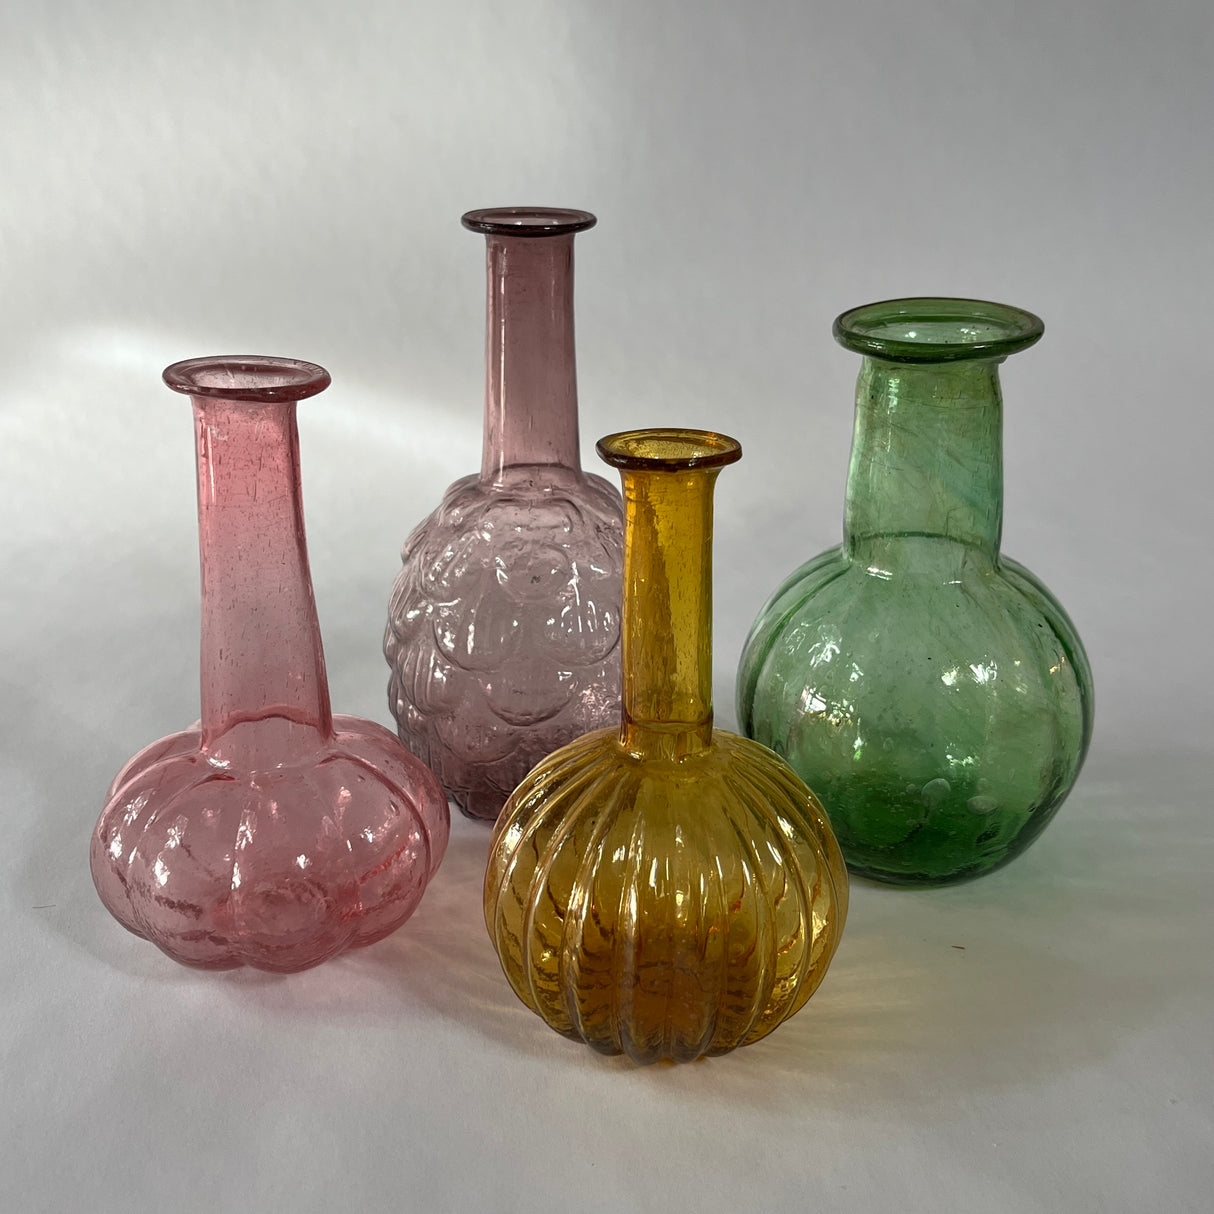 Lavender Glass Bud Vase